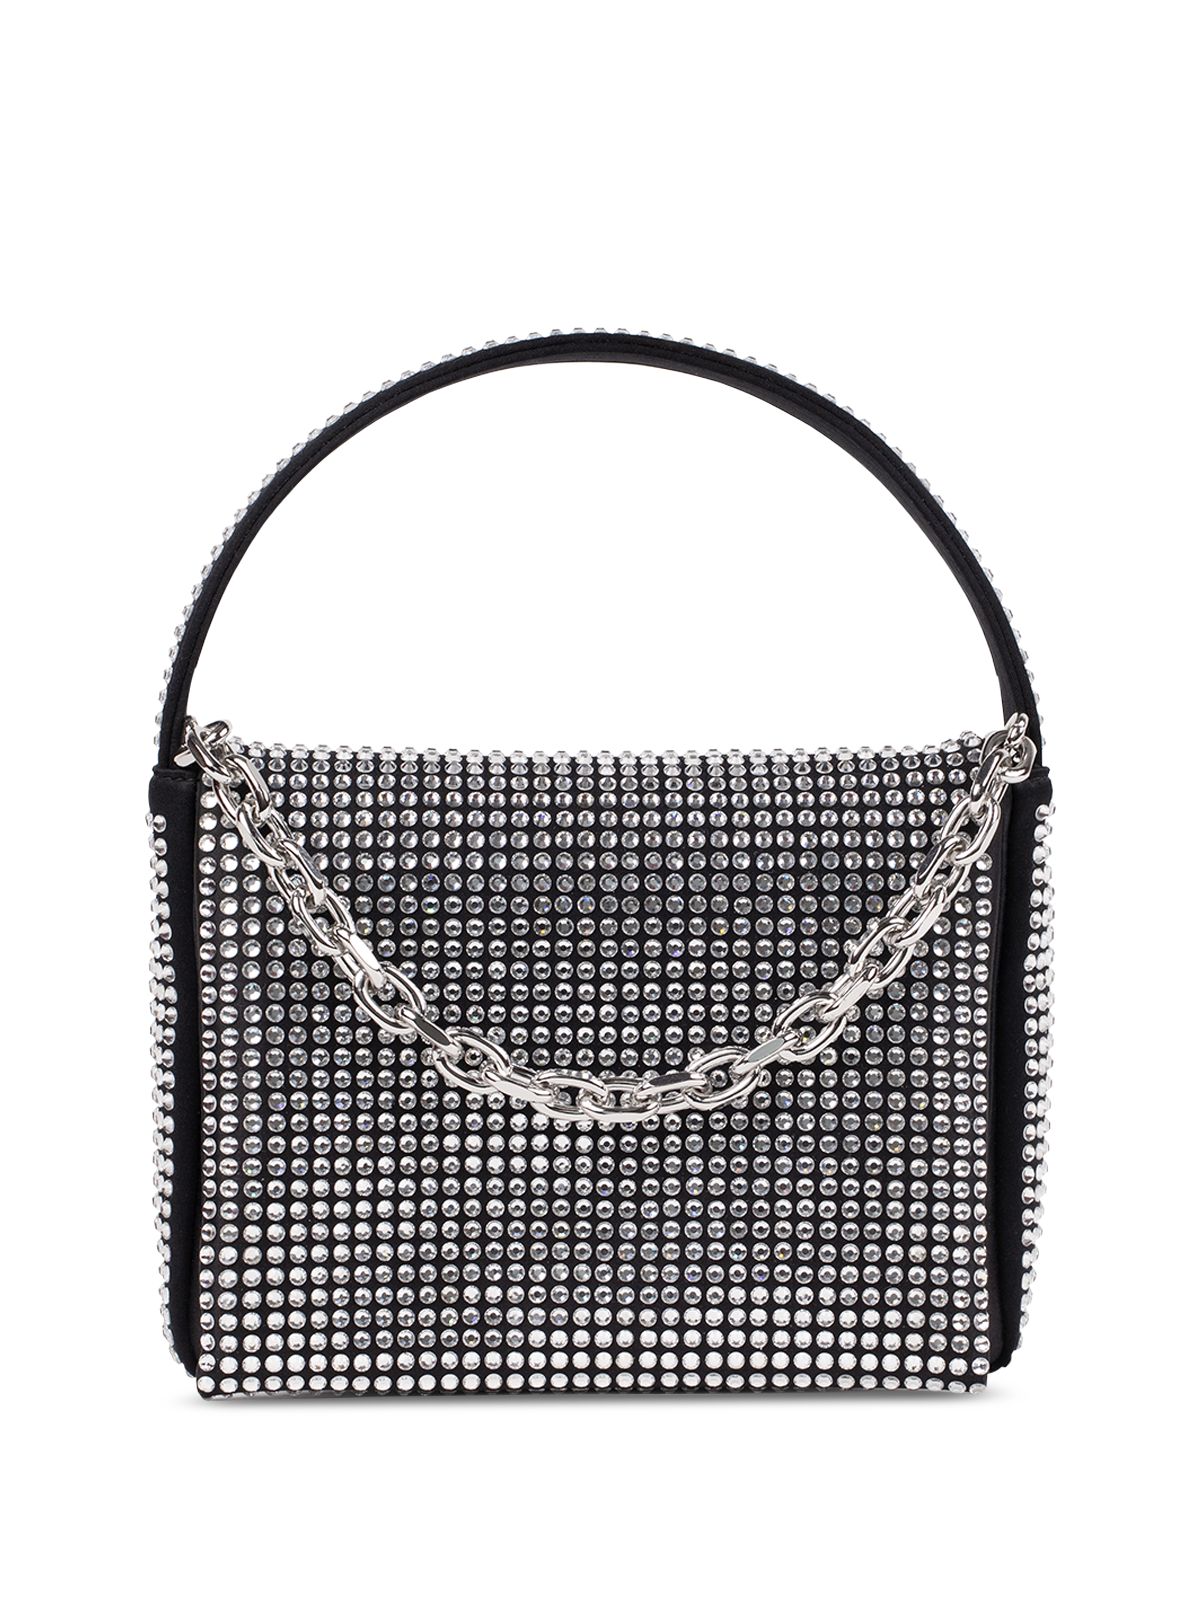 LISELLE KISS Women's Black Rhinestone Solid Chain Detail Single Strap Crossbody Handbag Purse